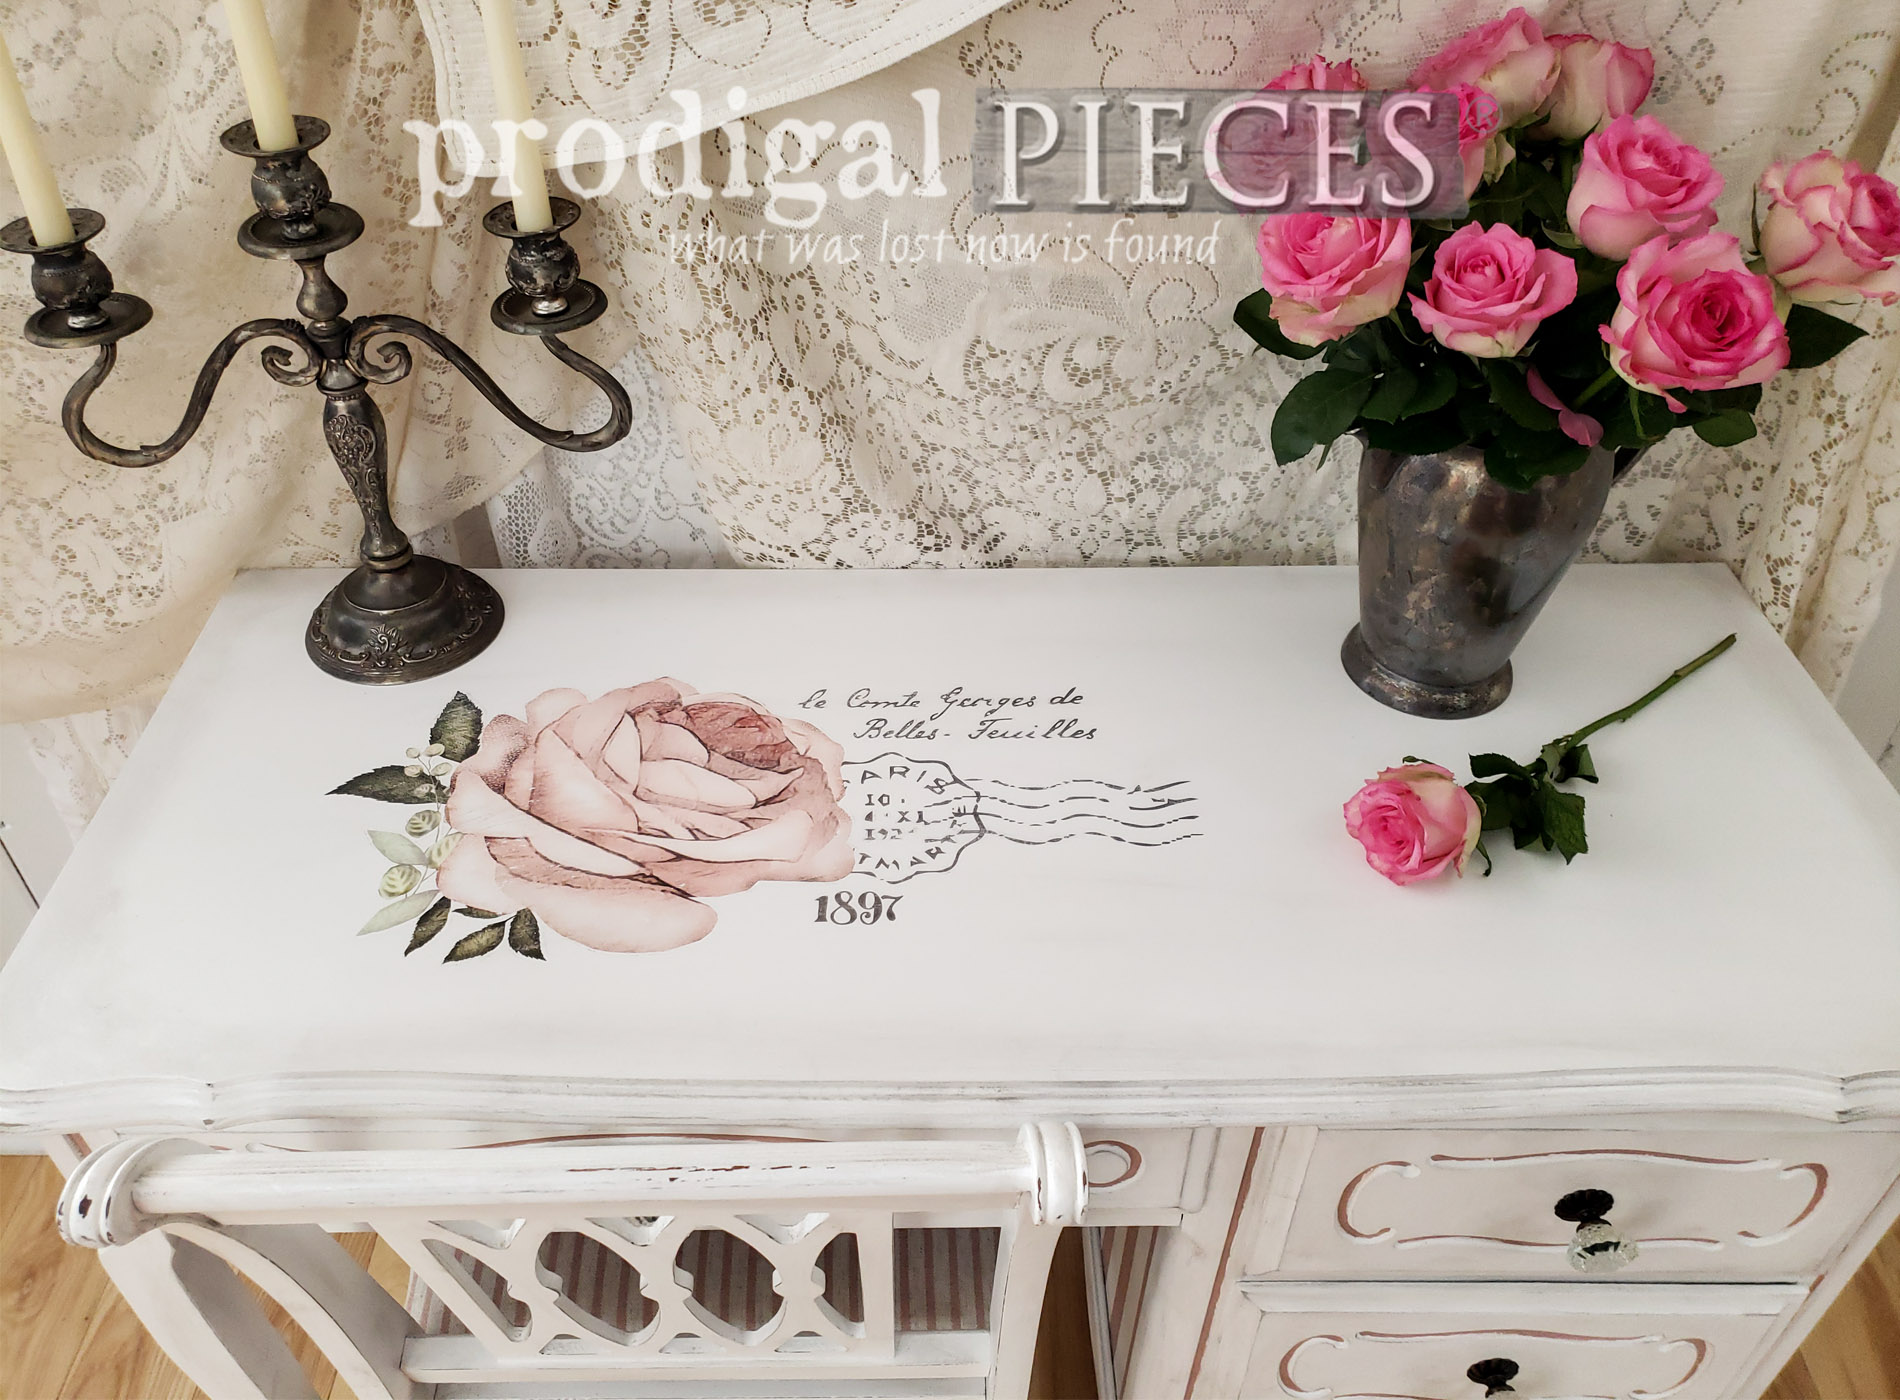 Featured French Provincial Desk Makeover by Larissa of Prodigal Pieces | prodigalpieces.com #prodigalpieces #furniture #diy #home #homedecor